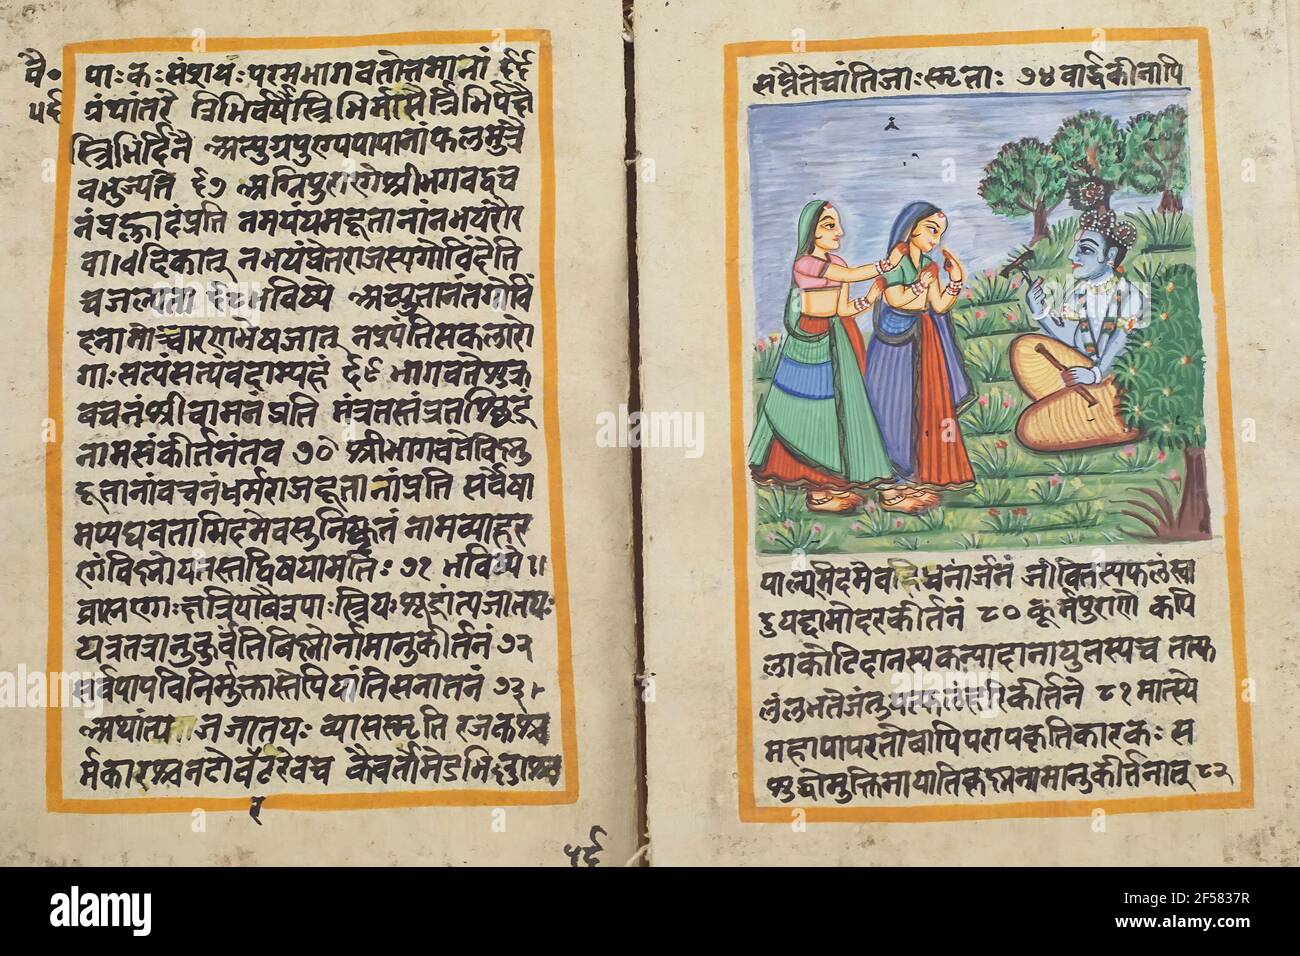 JAIPUR, INDIA - OCT 11, 2017 - Scenes from the Ramayana in antique manuscript,  Jaipur, Rajasthan, India Stock Photo